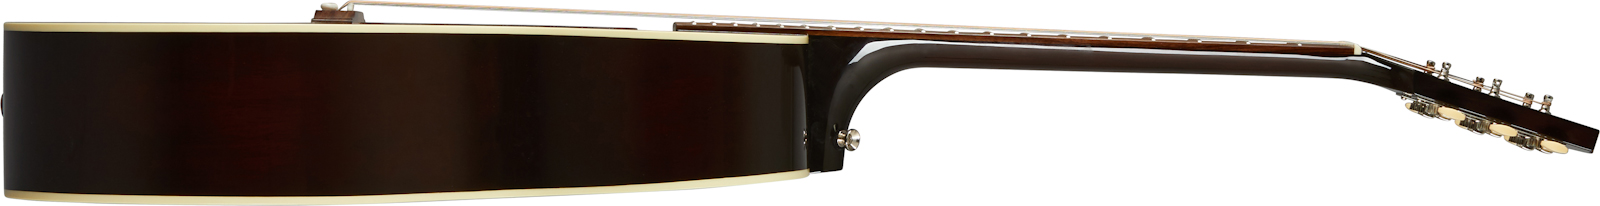 Gibson L-00 Original 2020 Parlor Epicea Acajou Rw - Vintage Sunburst - Elektroakustische Gitarre - Variation 2